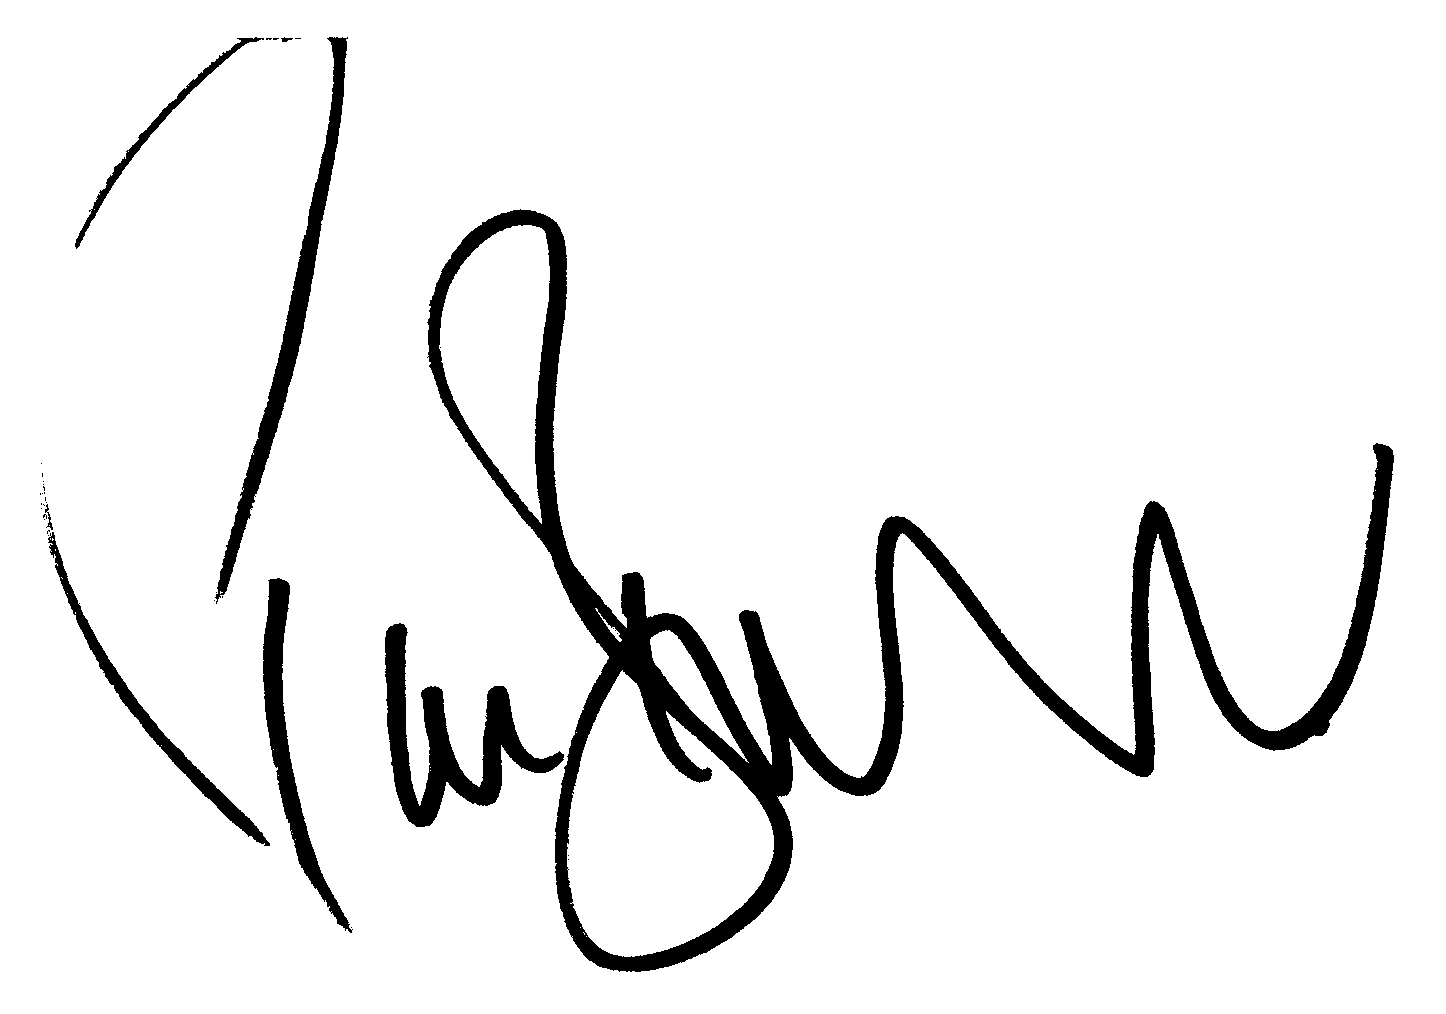 Pierce Brosnan autograph facsimile